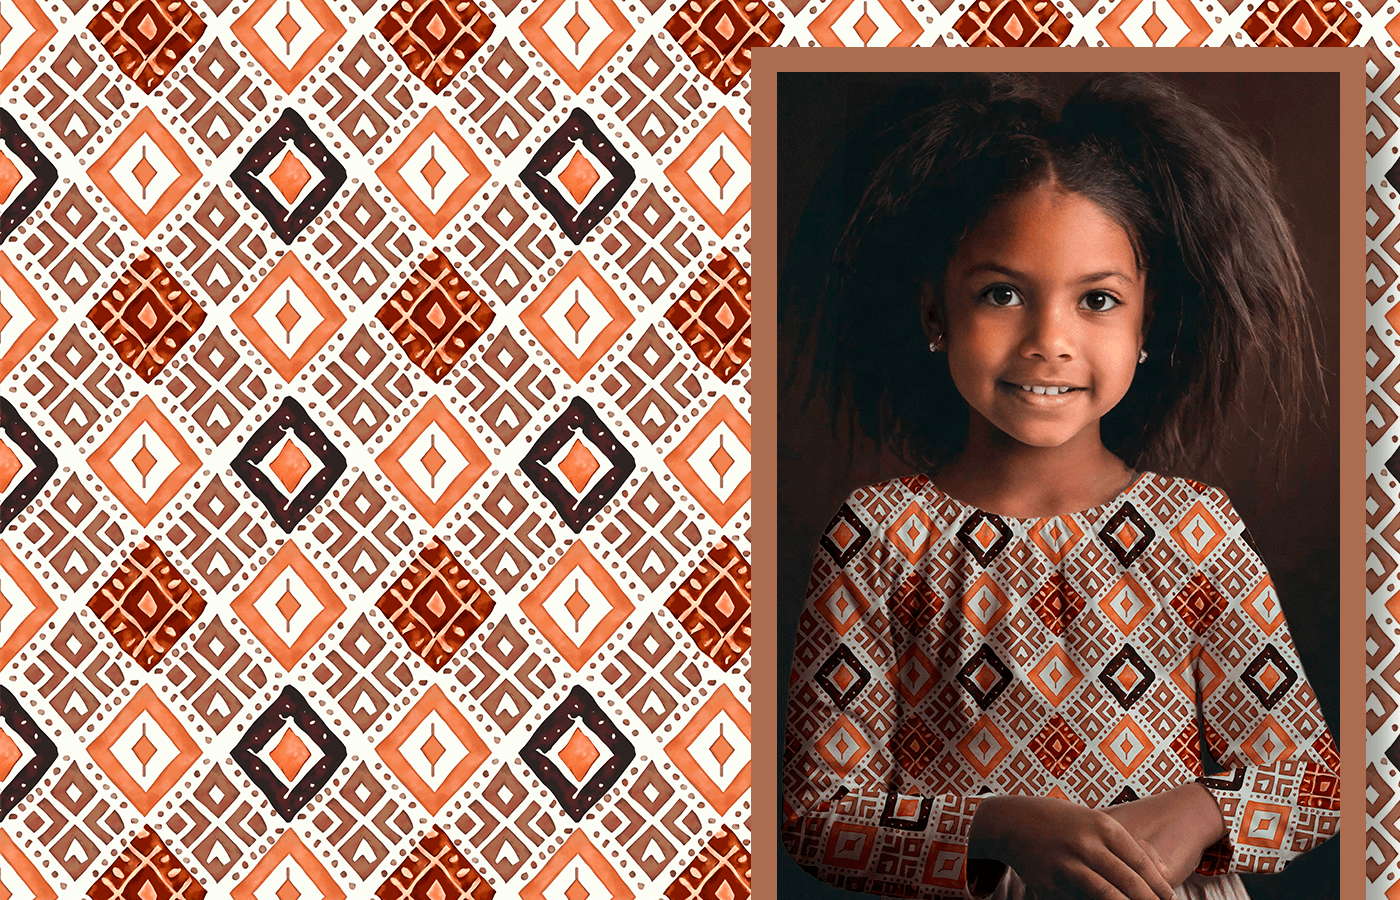 Ethnic pattern textile print surface design Digital Art  Drawing  seamless indigenous digital illustration